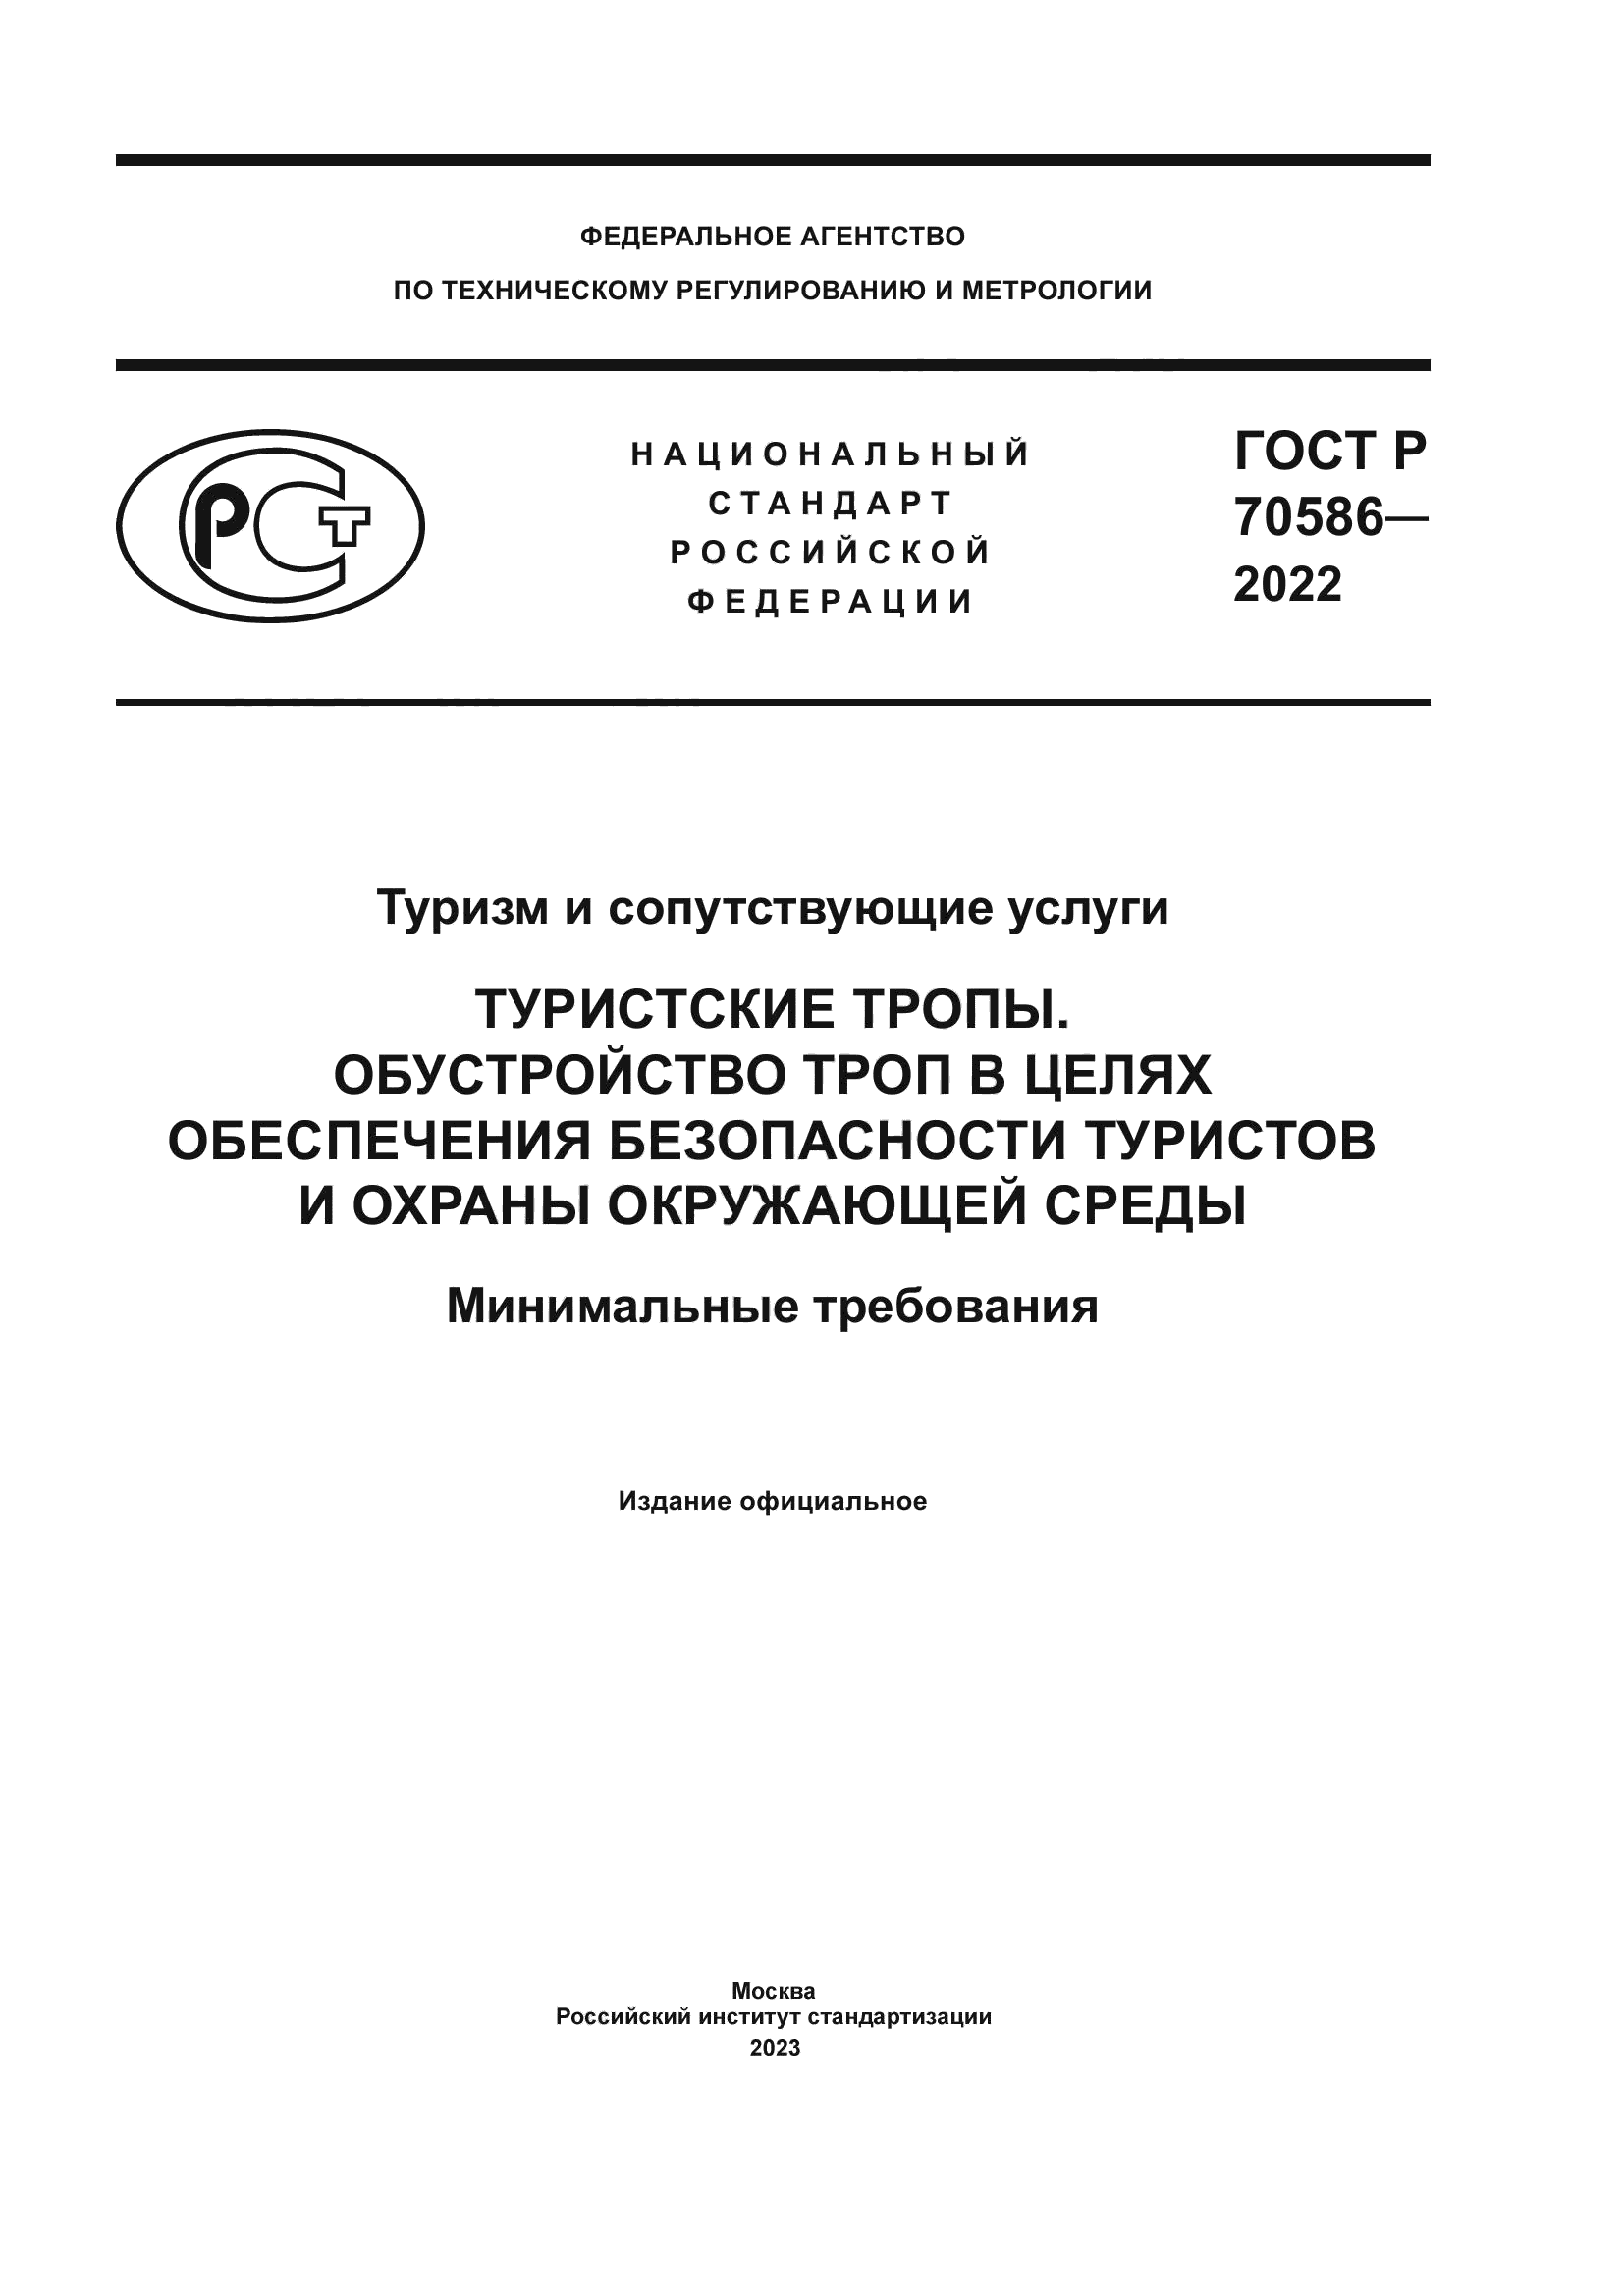 ГОСТ Р 70586-2022